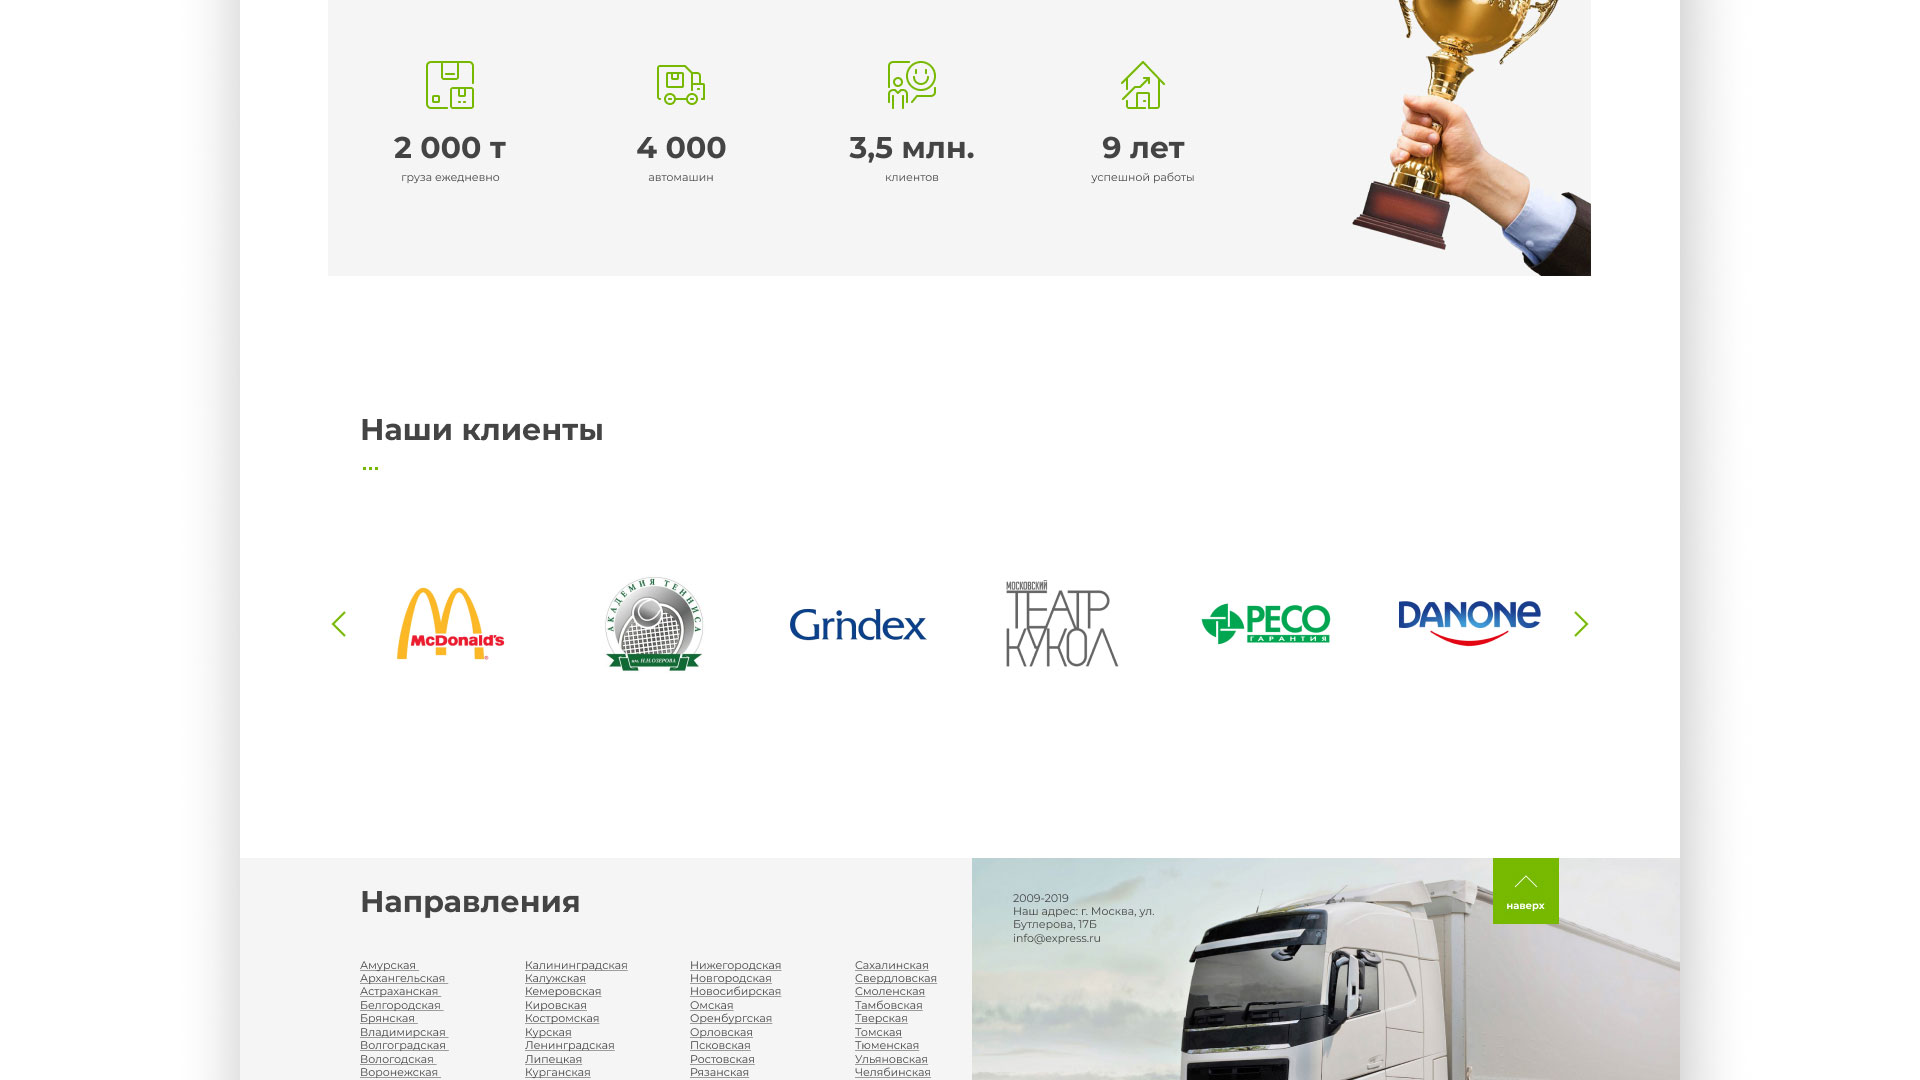 Разработка логотипа и сайта компании «Инком-Логистика» в 